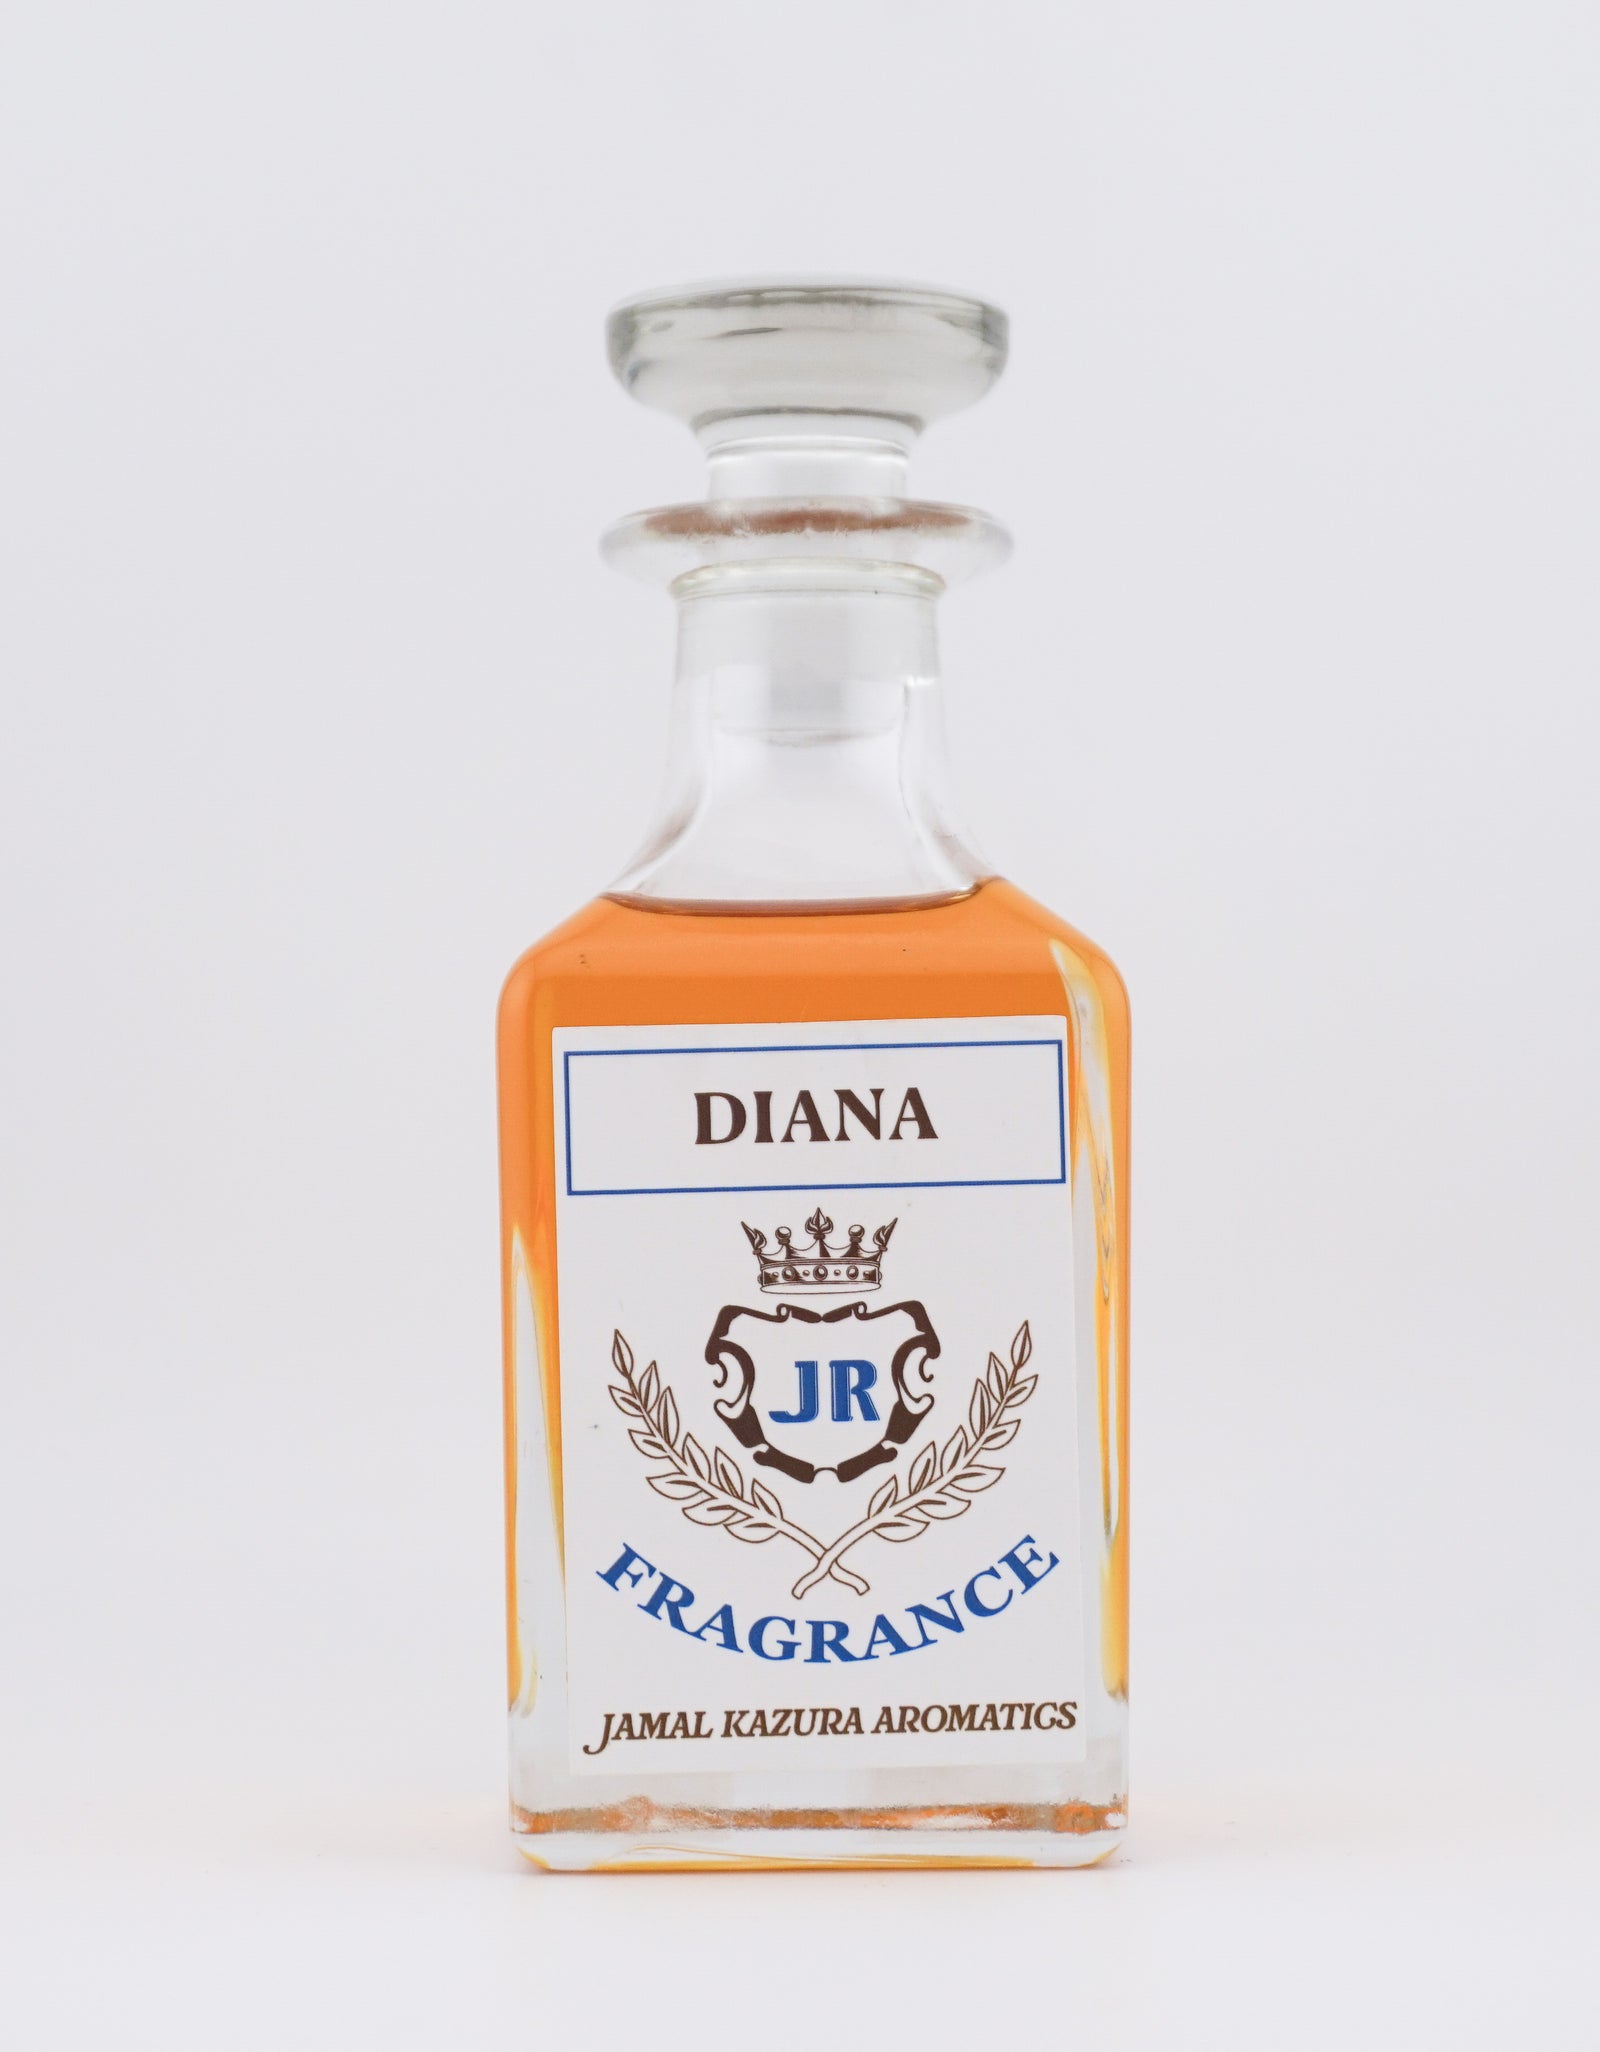 Diana Perfume Decanters - Jamal Kazura Aromatics